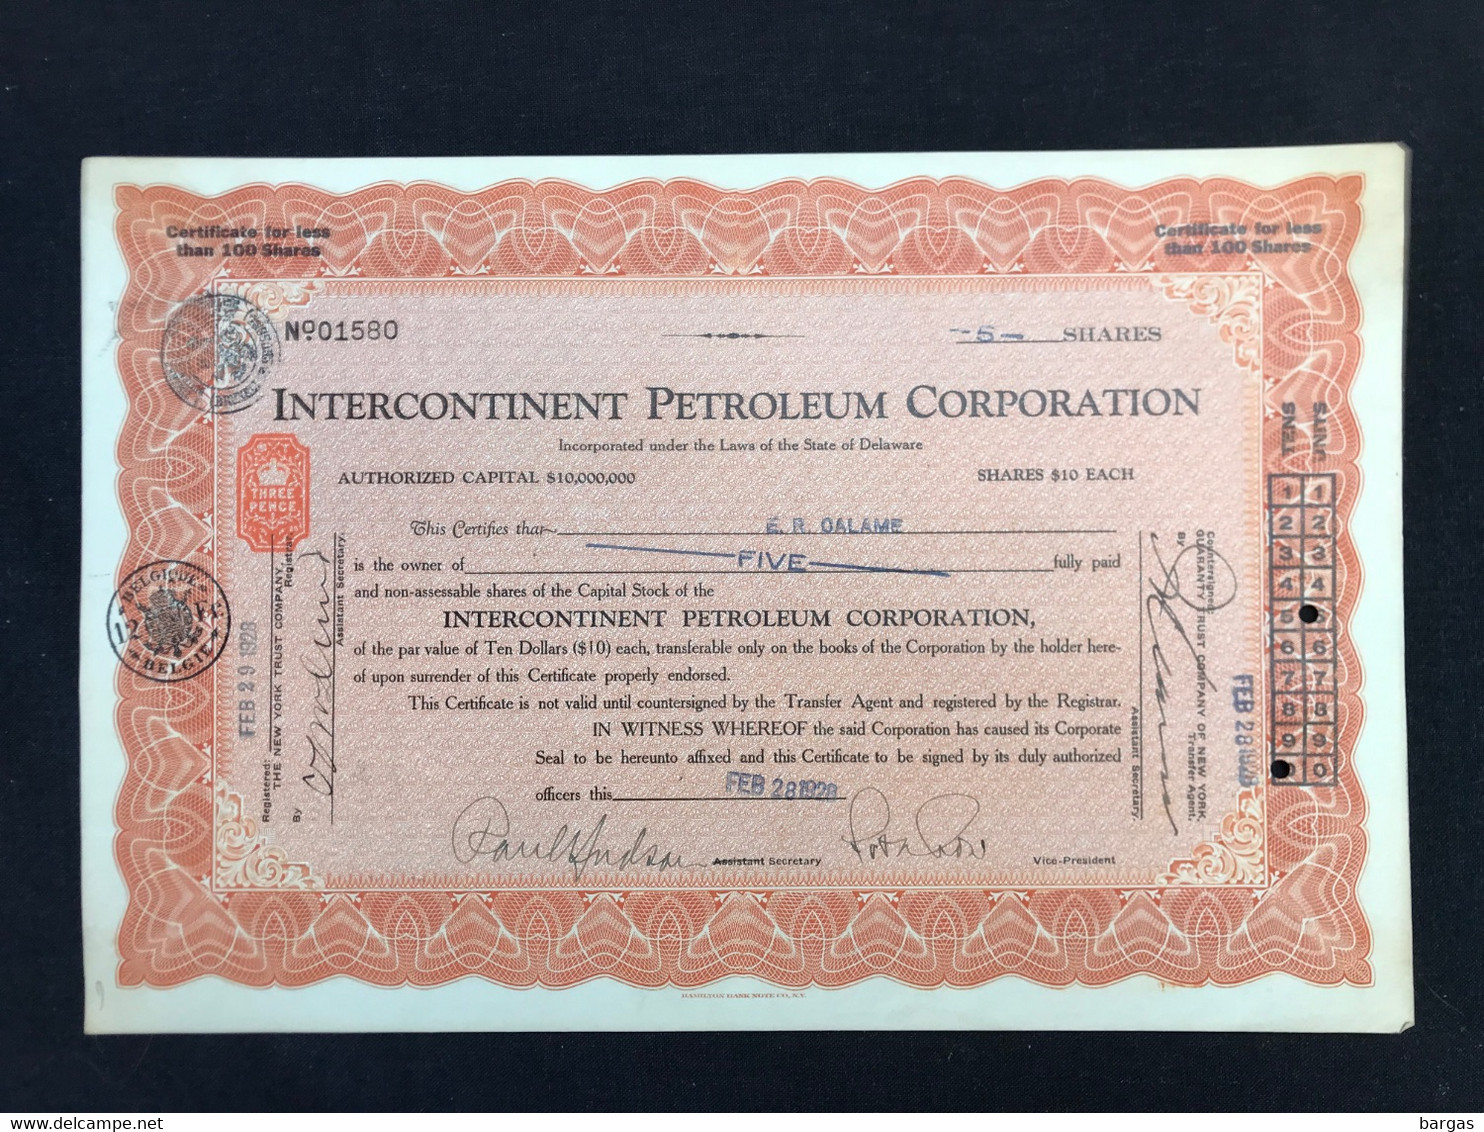 Intercontinent Petroleum Corporation - Oil